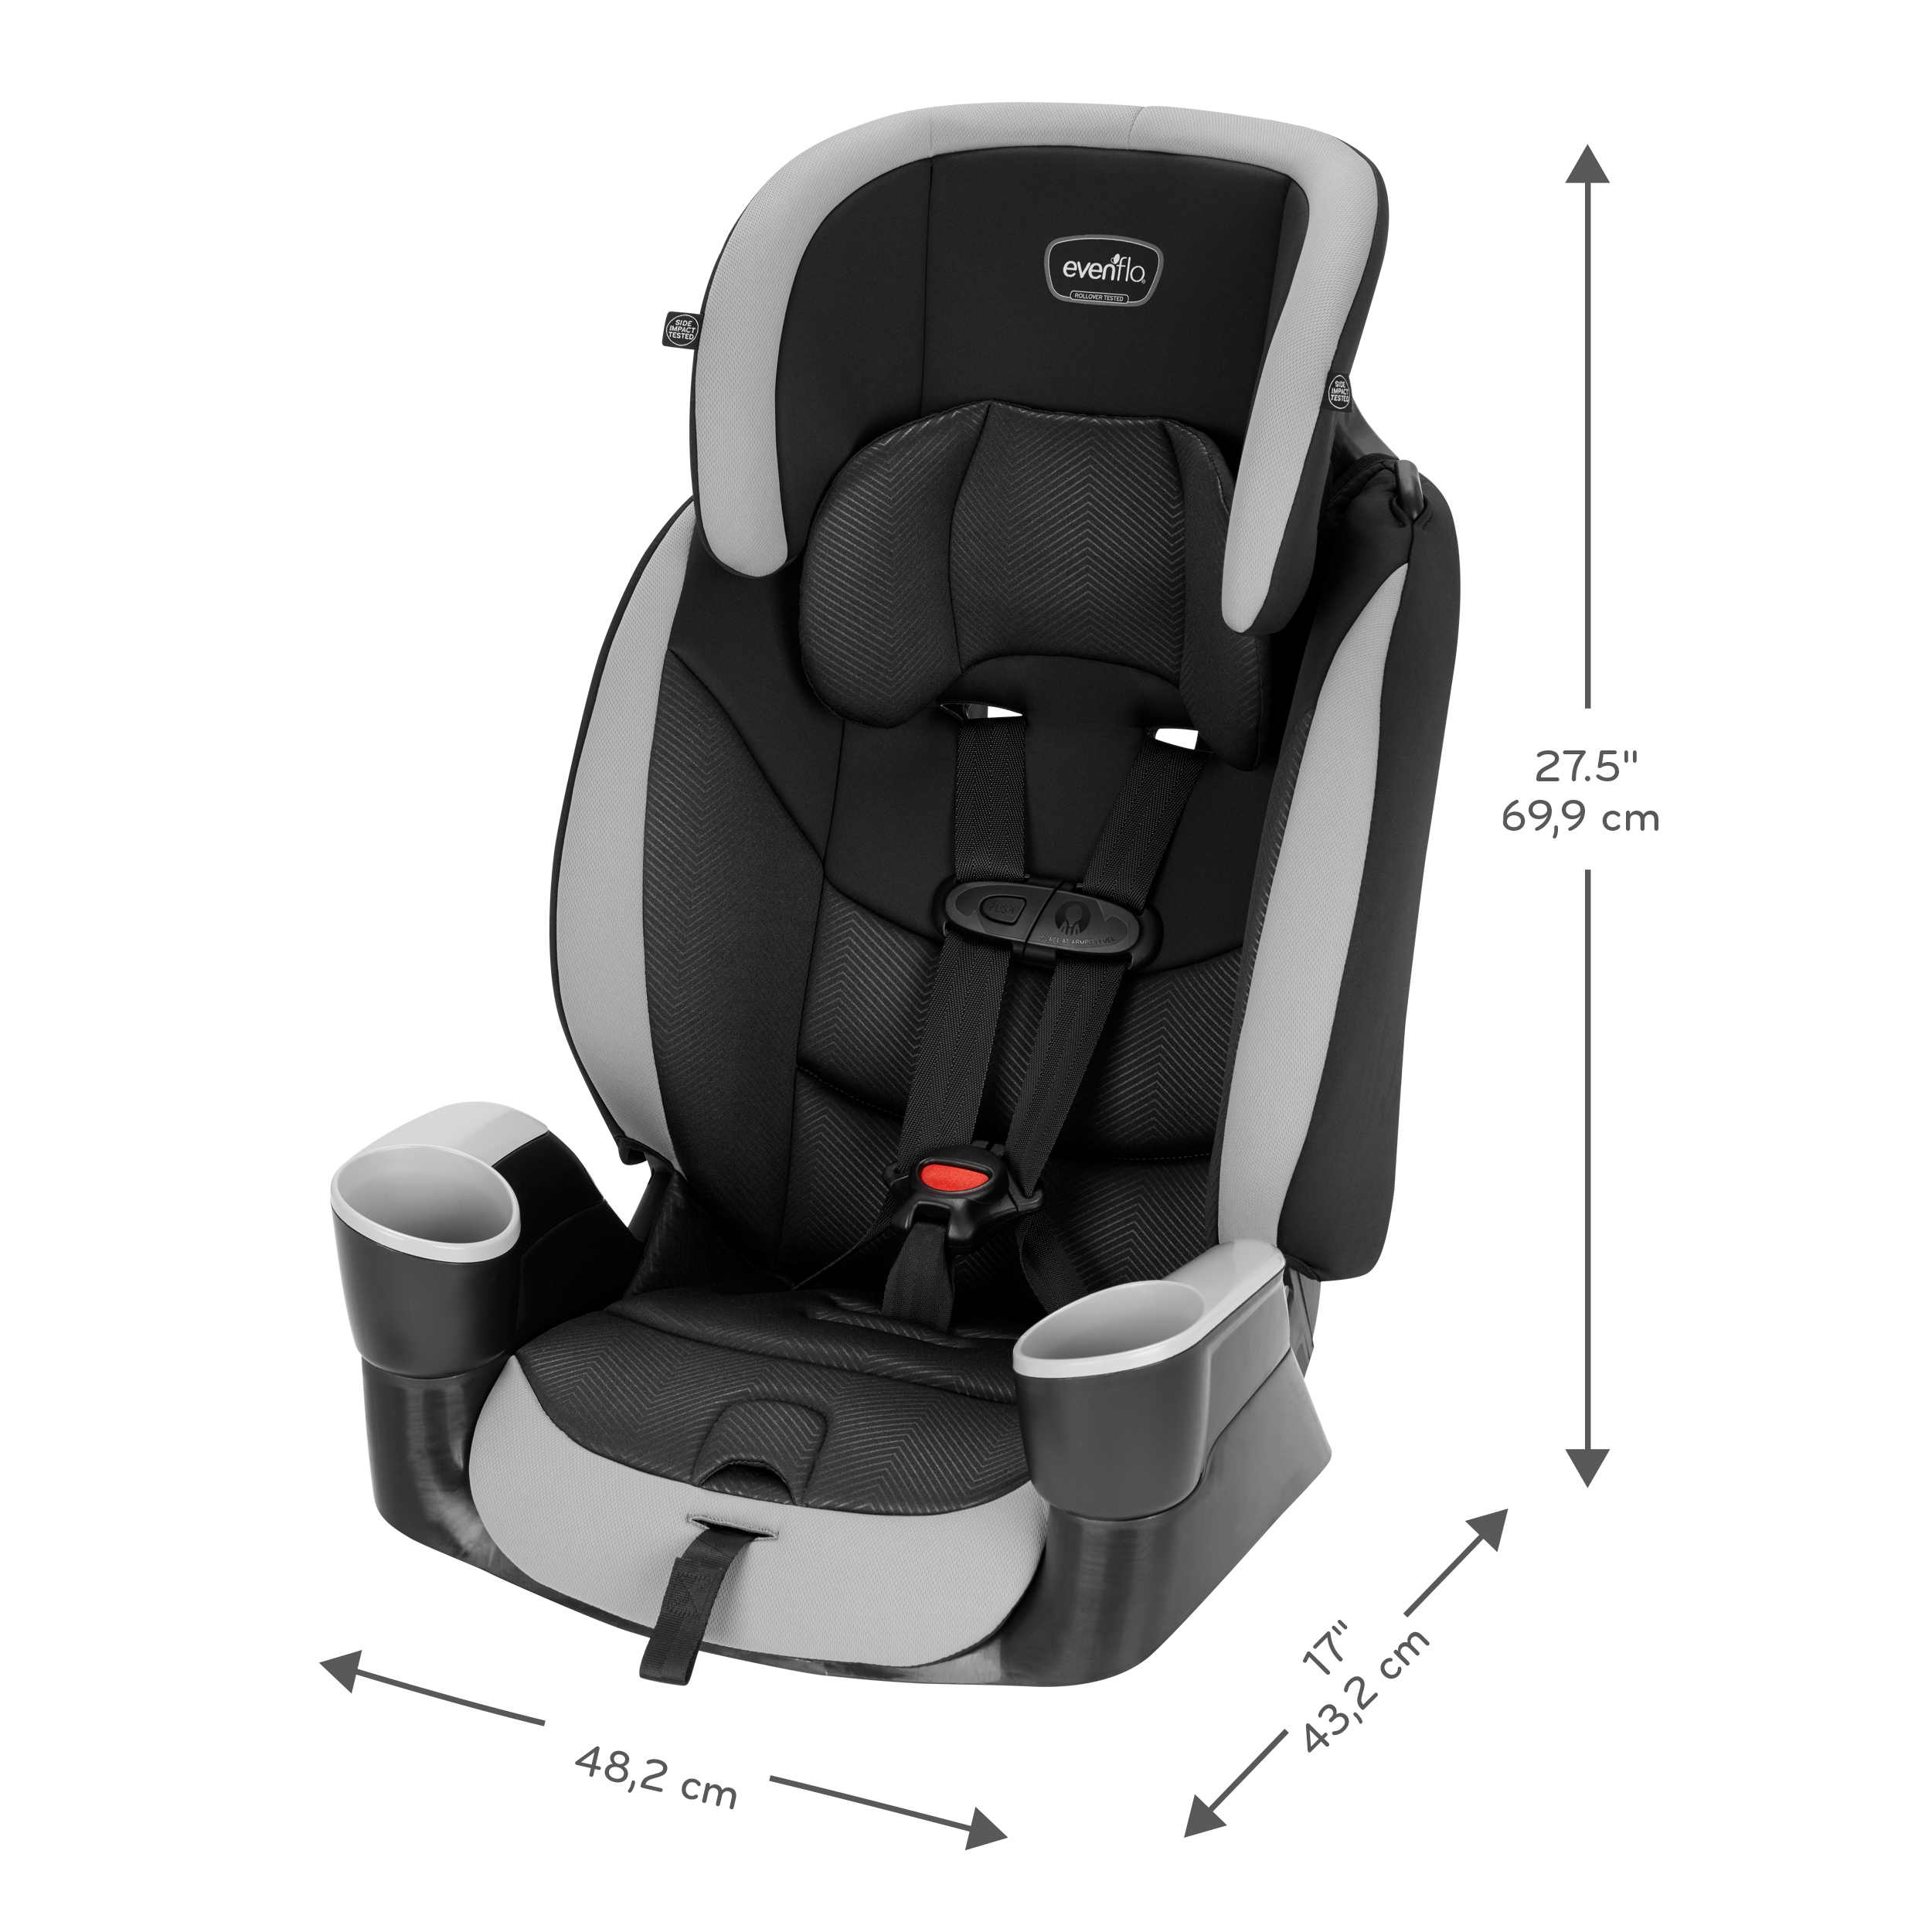 Maestro Sport Harness Booster Car Seat (Granite Gray) - image 6 of 15